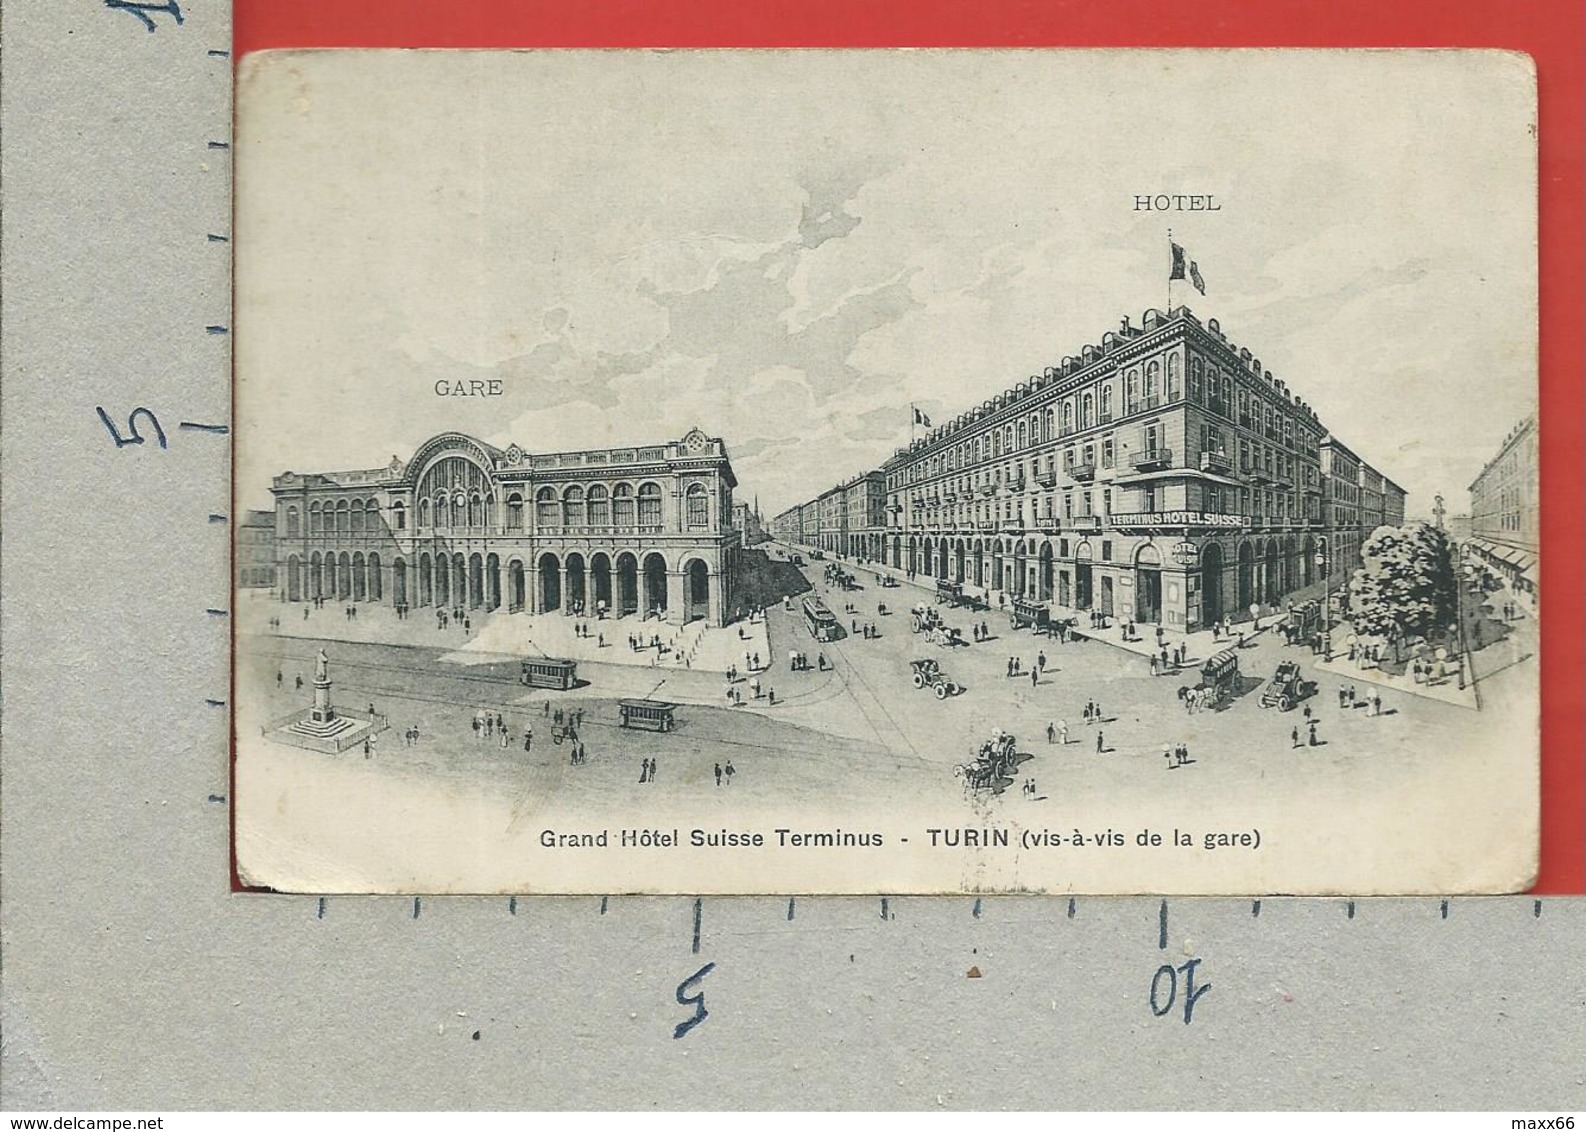 CARTOLINA VG ITALIA - Grand Hotel Suisse Terminus - TORINO TURIN - Vis A Vis De La Gare - 9 X 14 - 1911 - Wirtschaften, Hotels & Restaurants